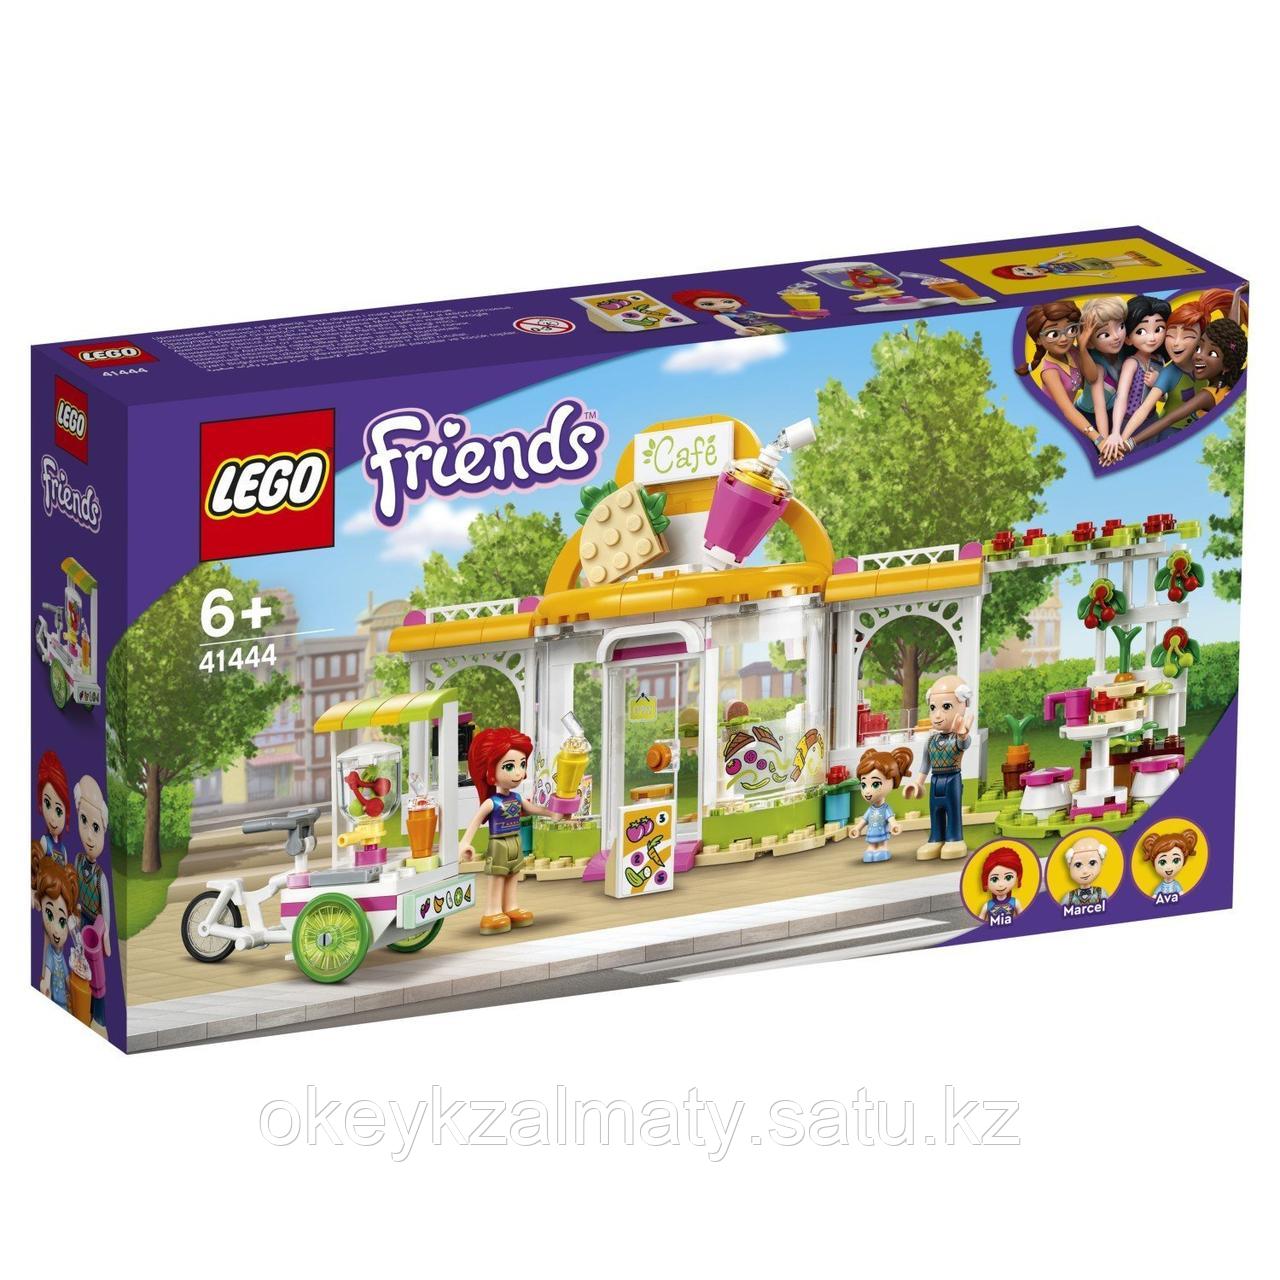 LEGO Friends: Органическое кафе Хартлейк-Сити 41444